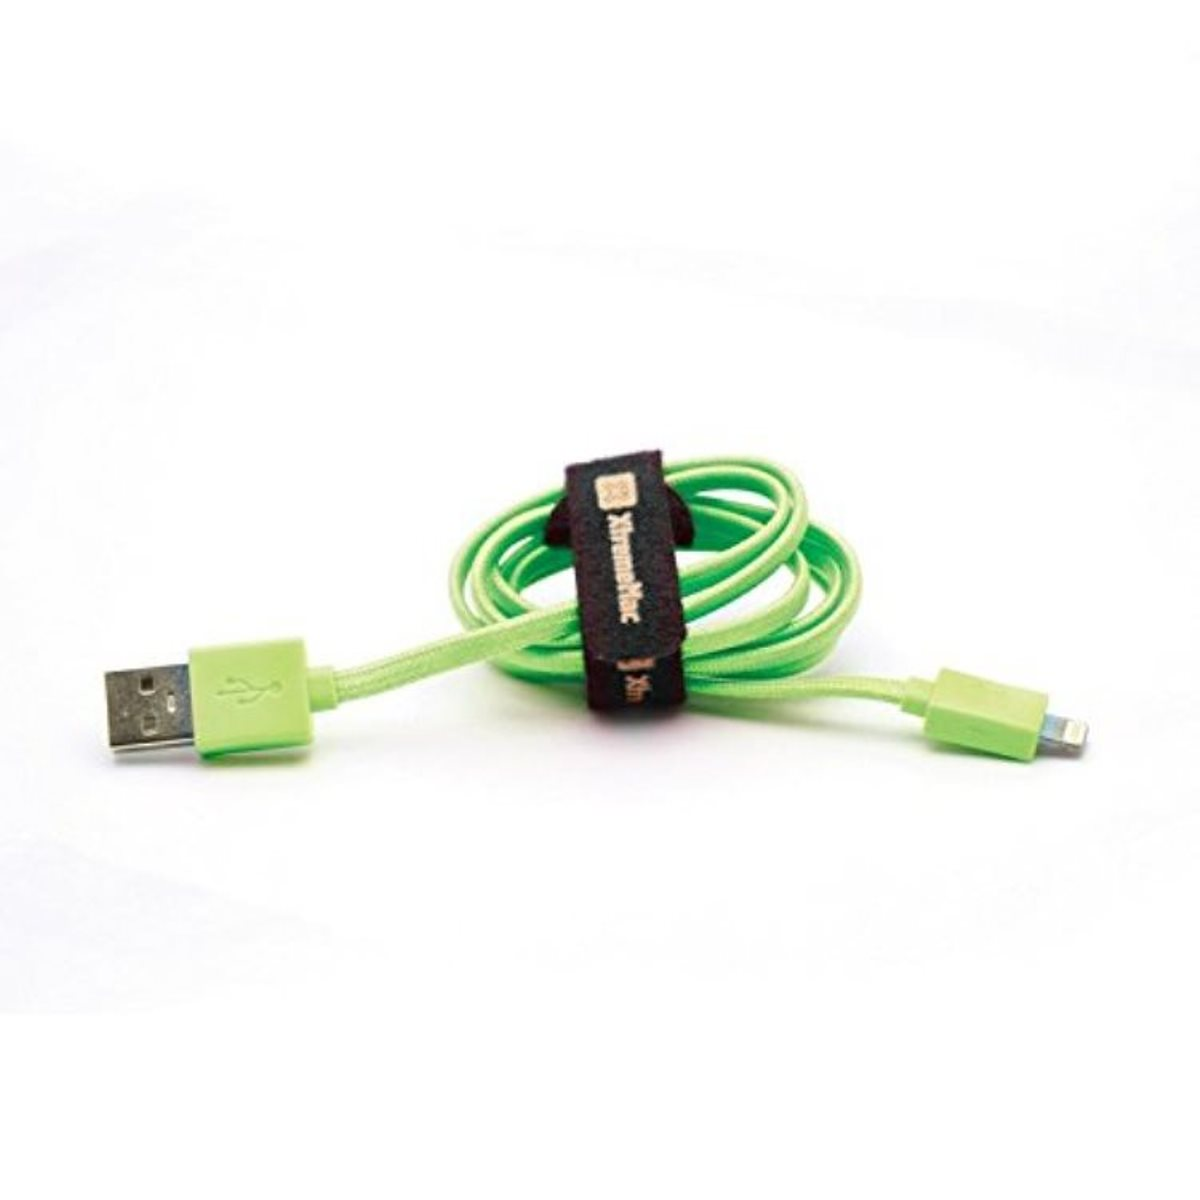 Grün Lightning Cable Green Lightning Kabel, 1m Flat MAC XTREME